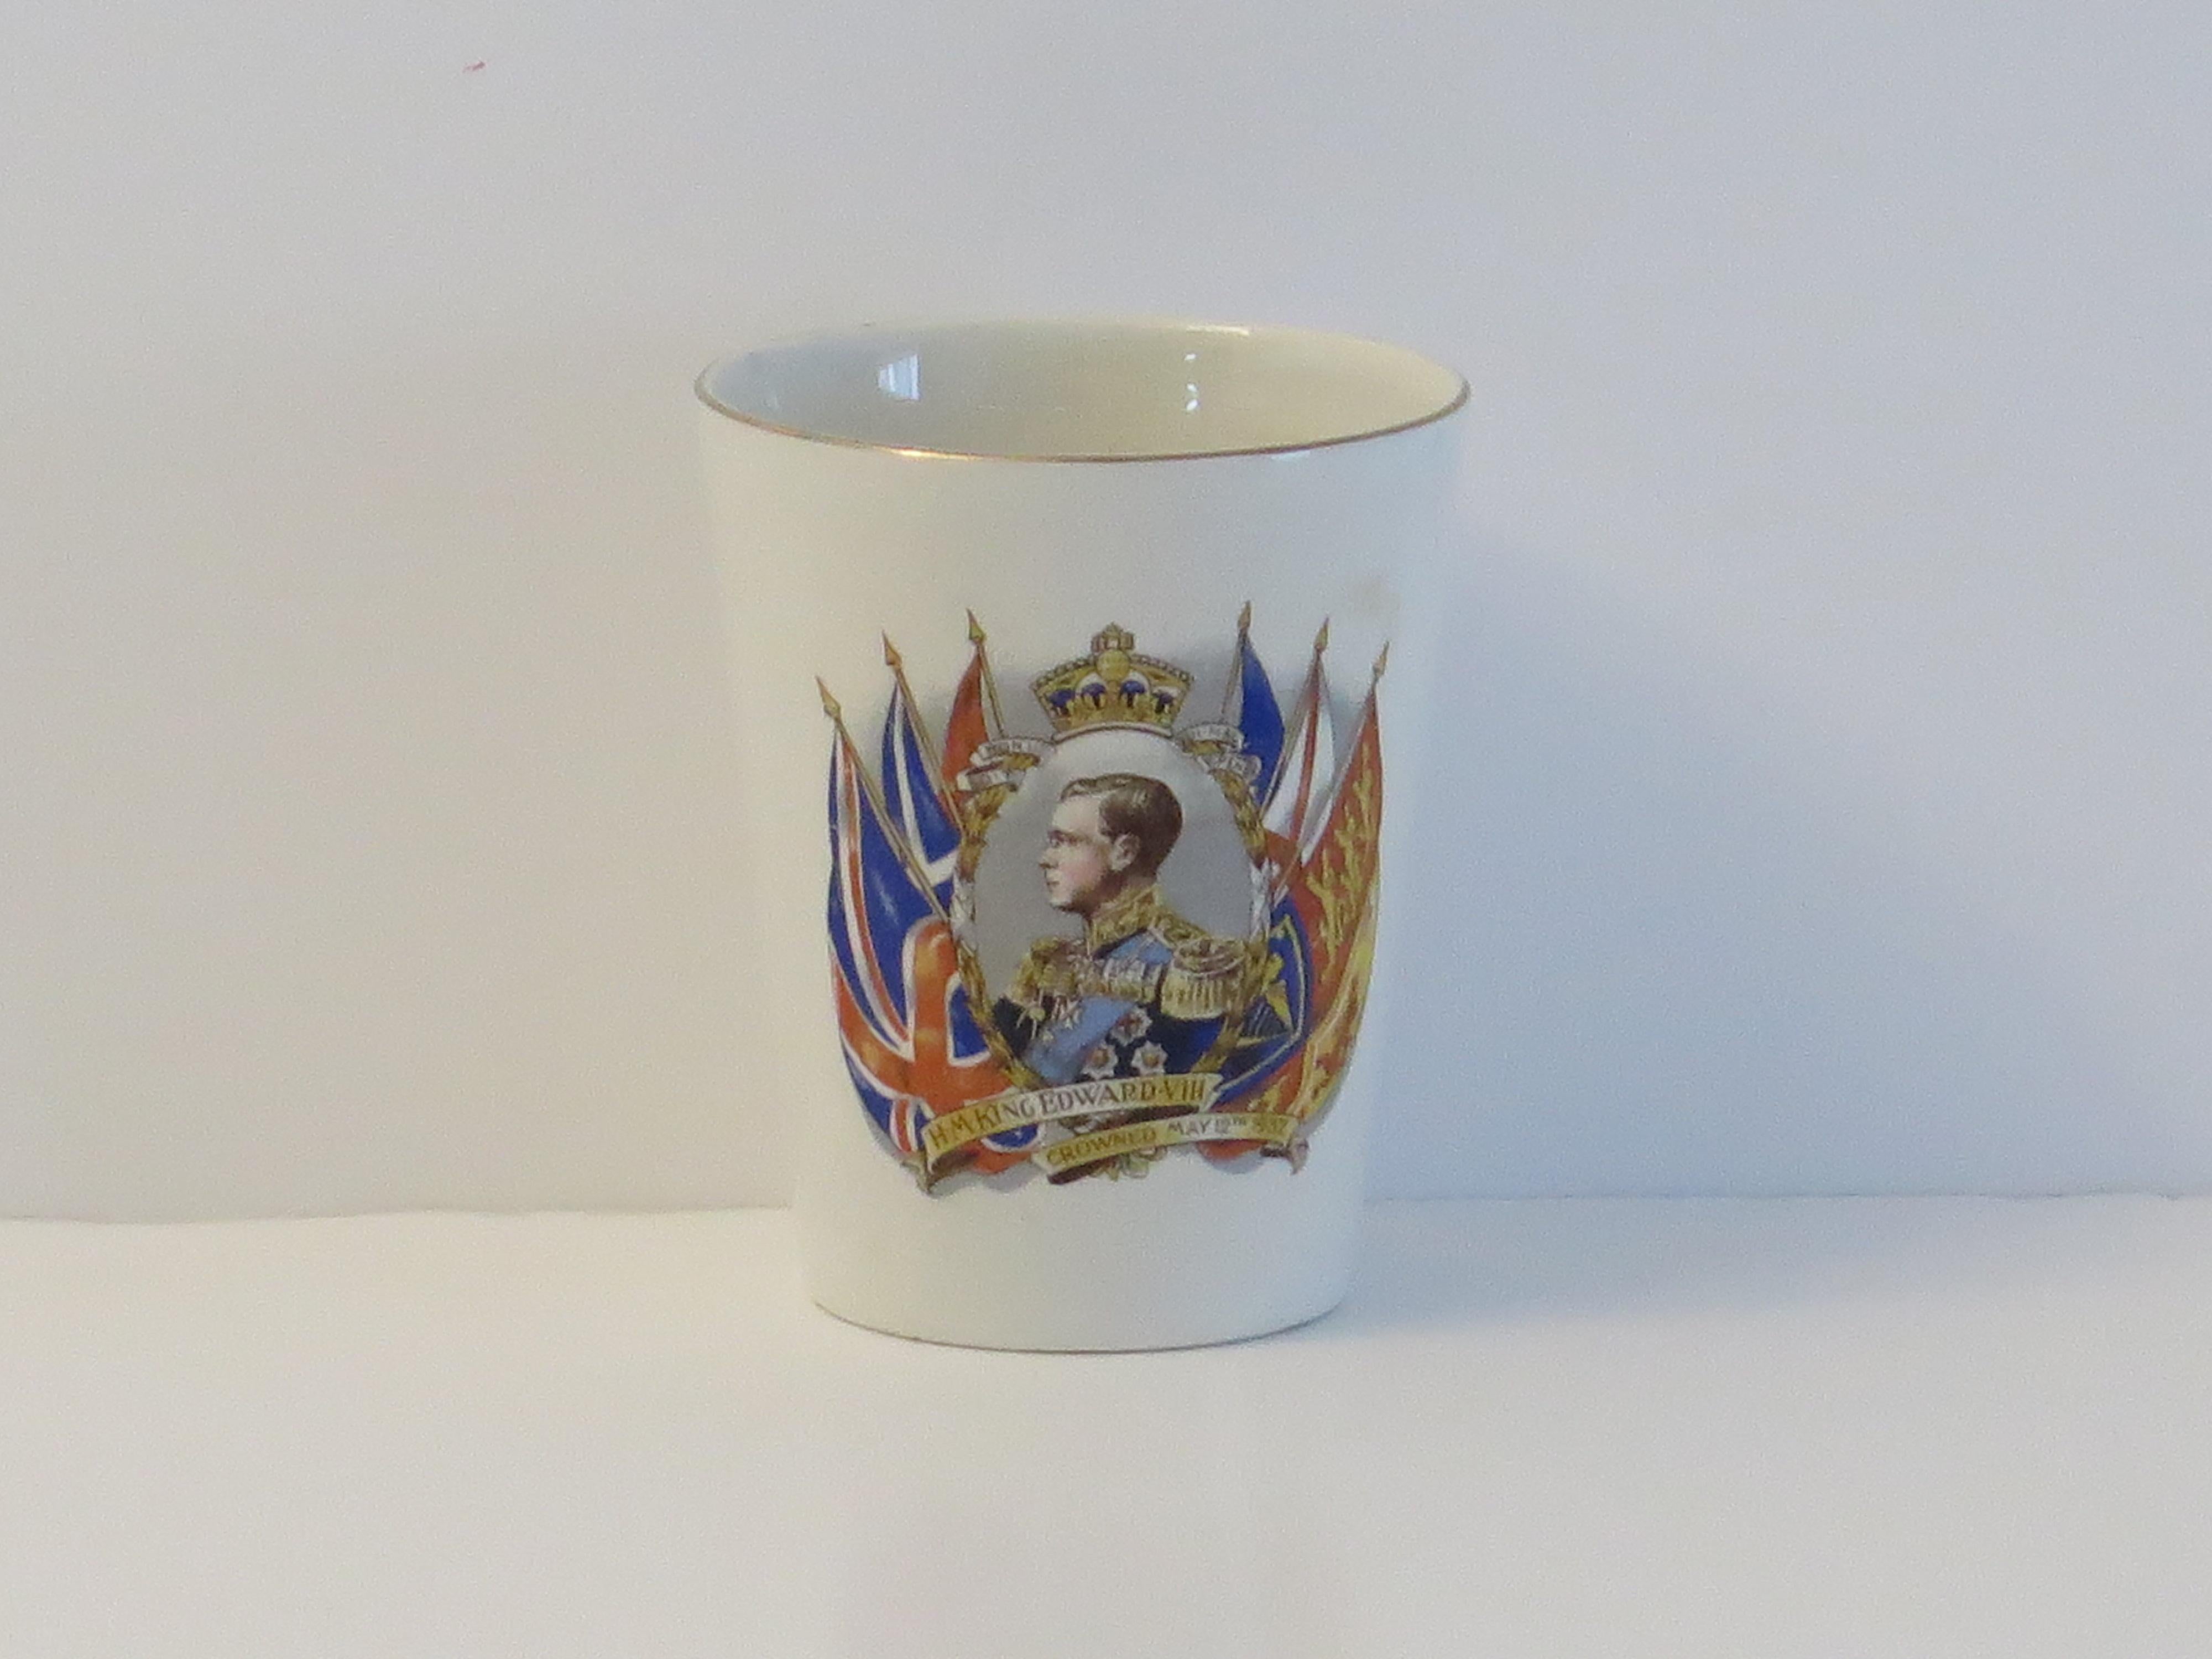 Le roi Edward V111  Gobelet Royal Commemorative Pottery, 12 mai 1937 Bon état - En vente à Lincoln, Lincolnshire